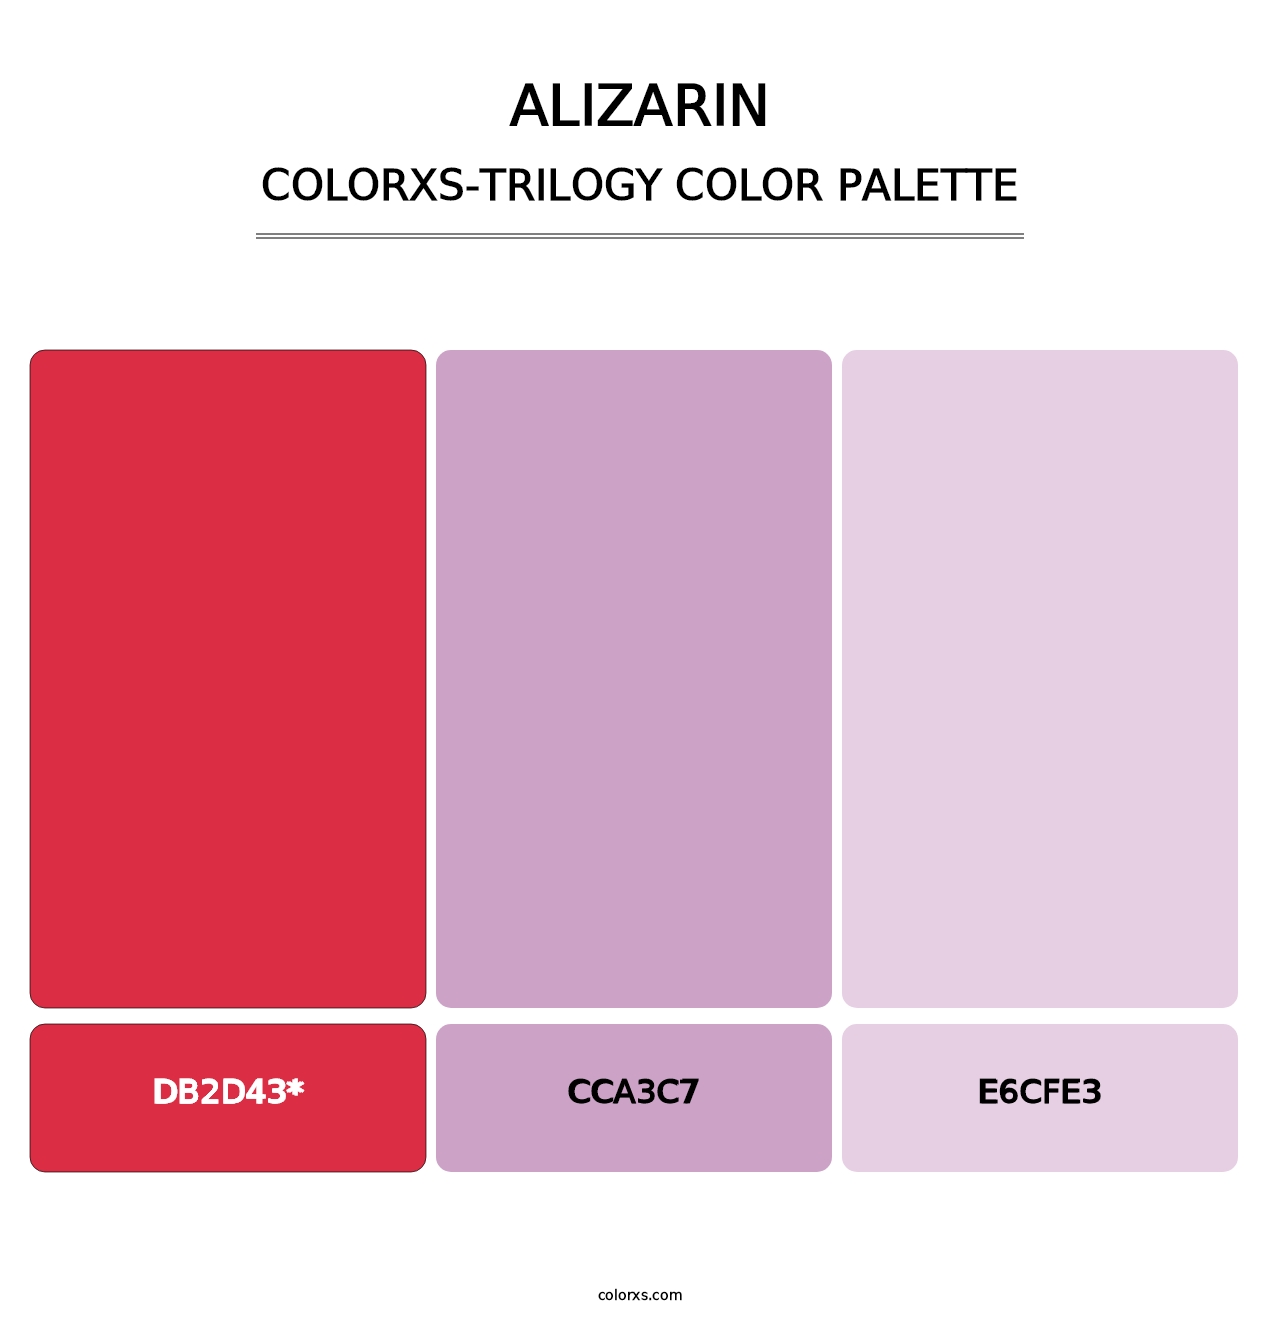 Alizarin - Colorxs Trilogy Palette